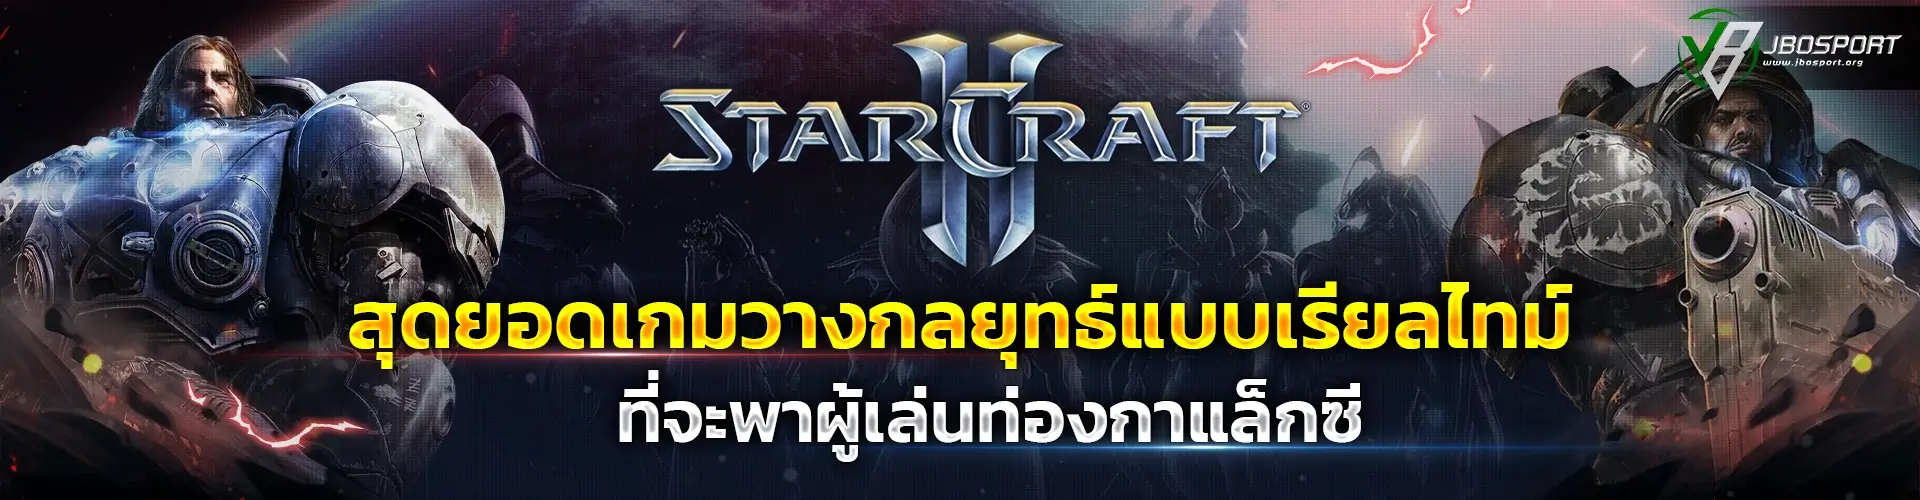 StarCraft-2 JBOSPORT